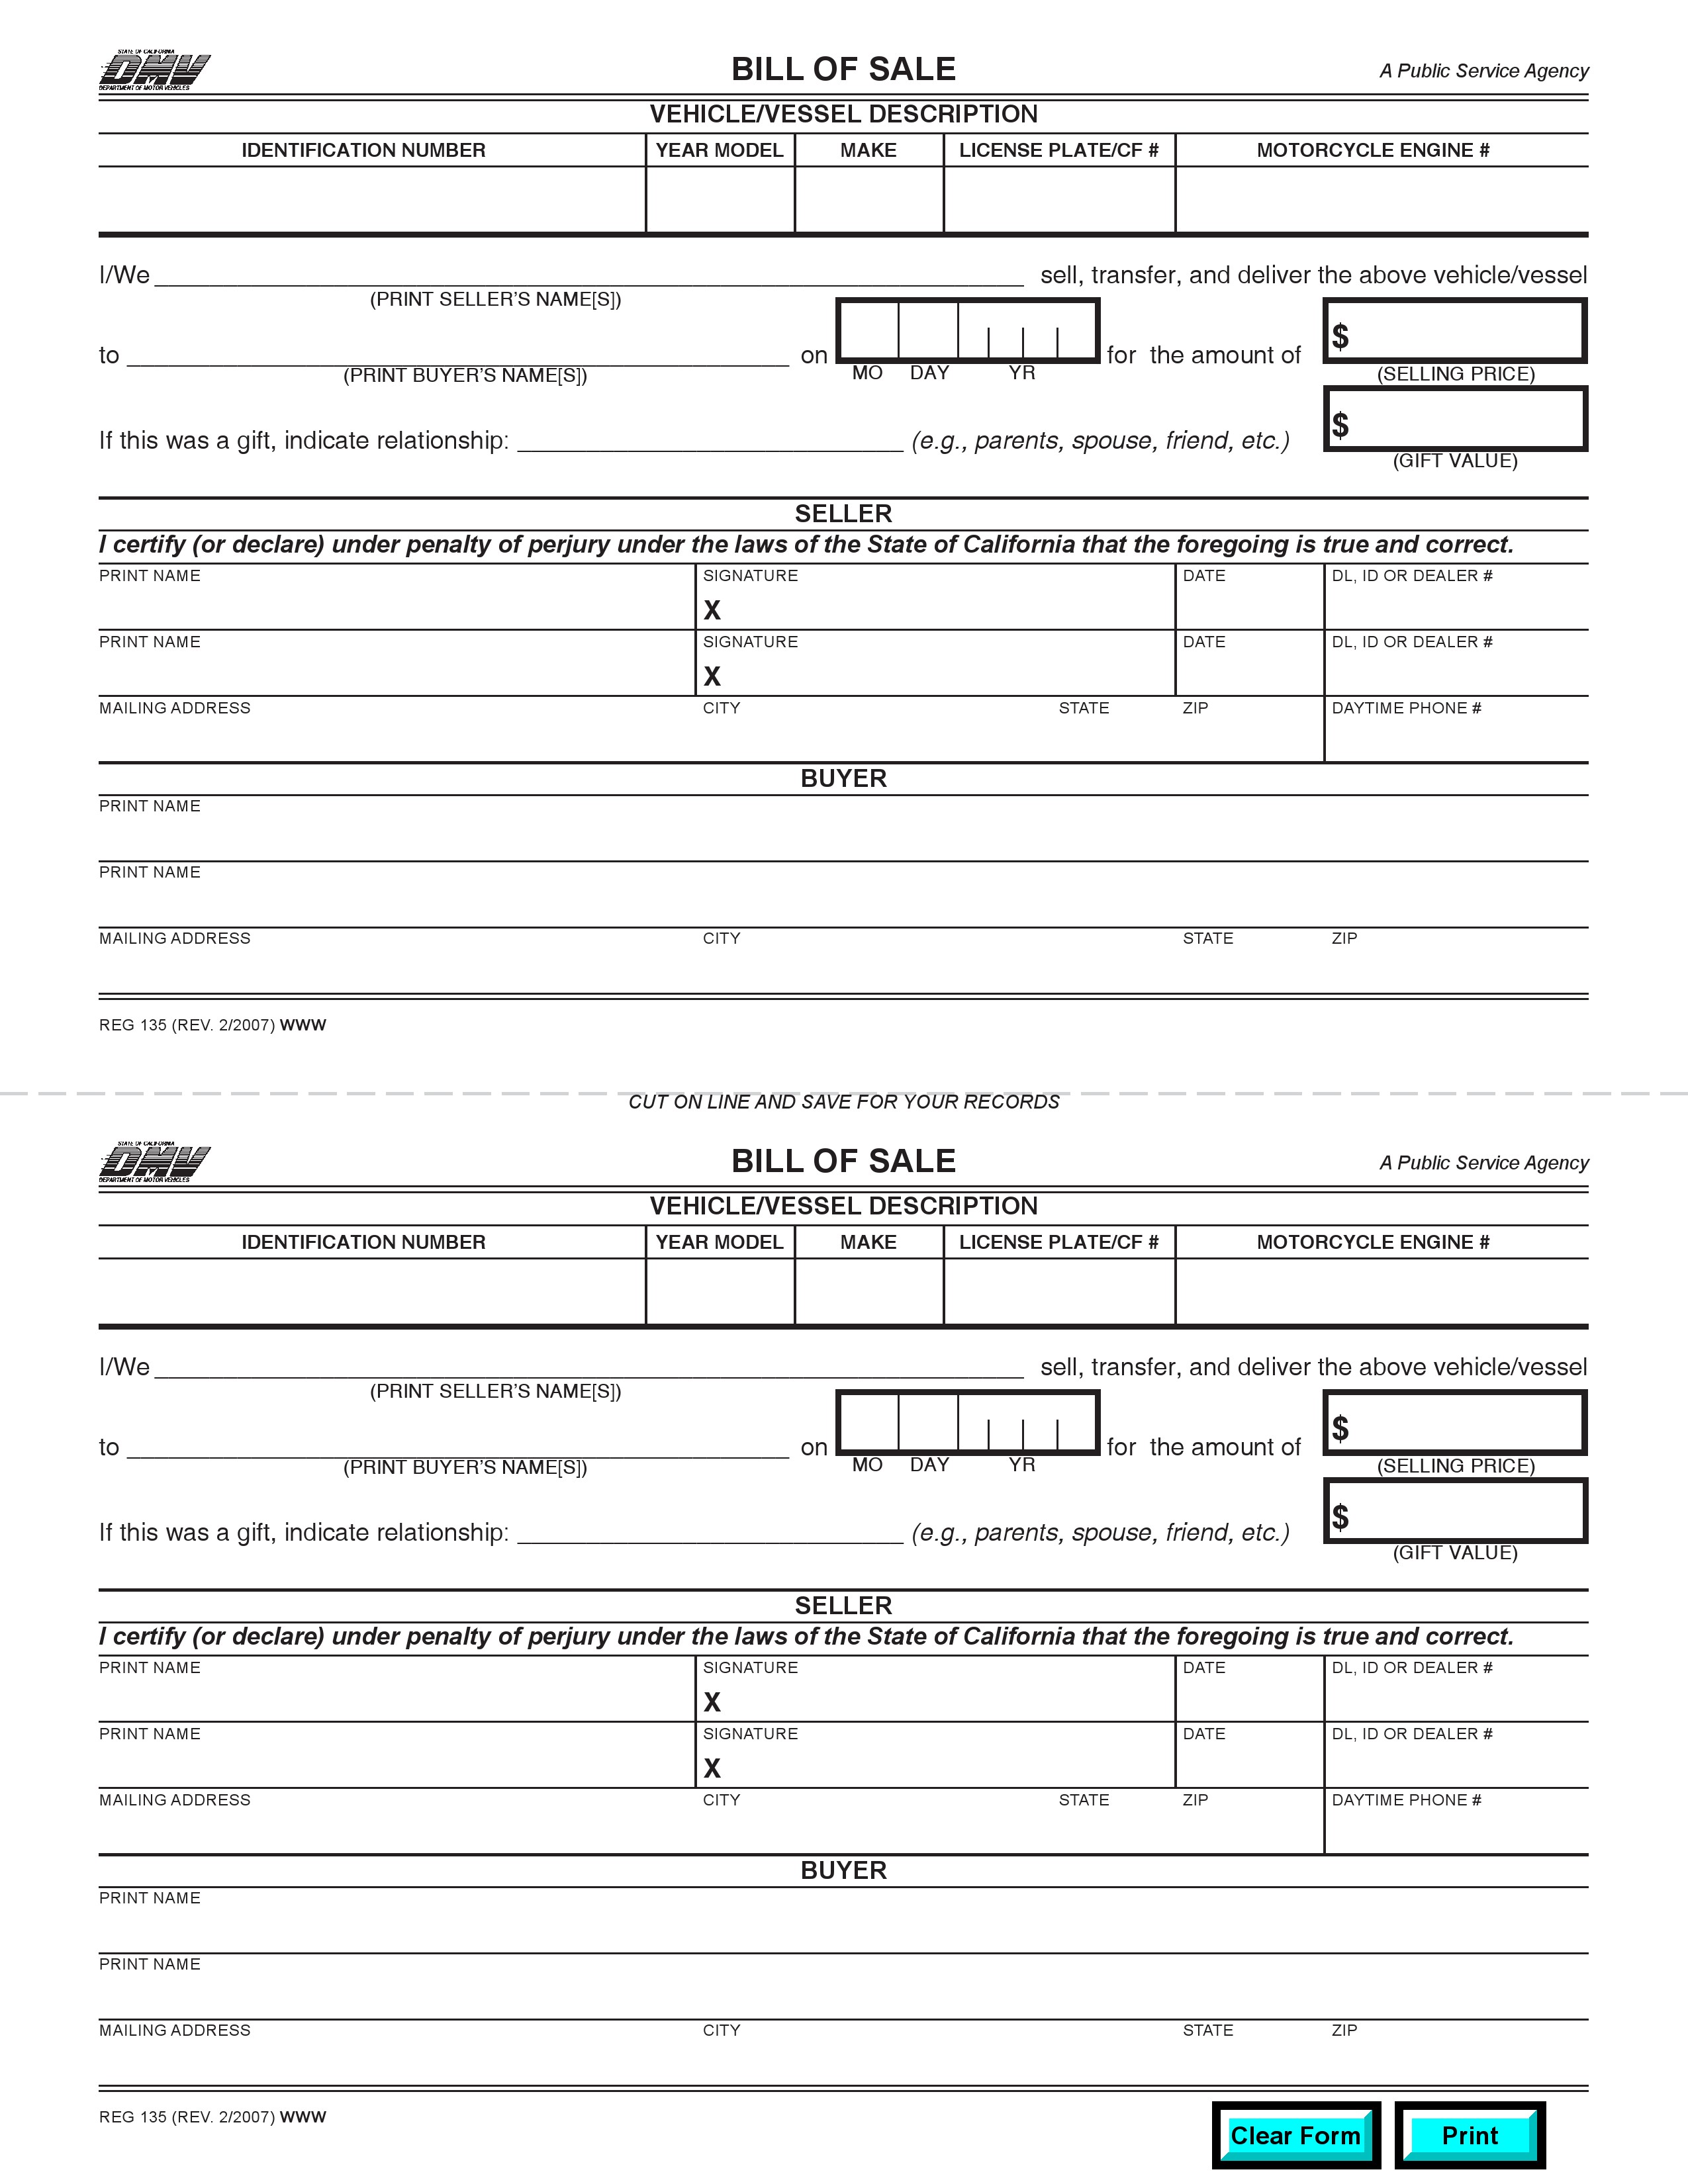 California DMV Bill of Sale Form